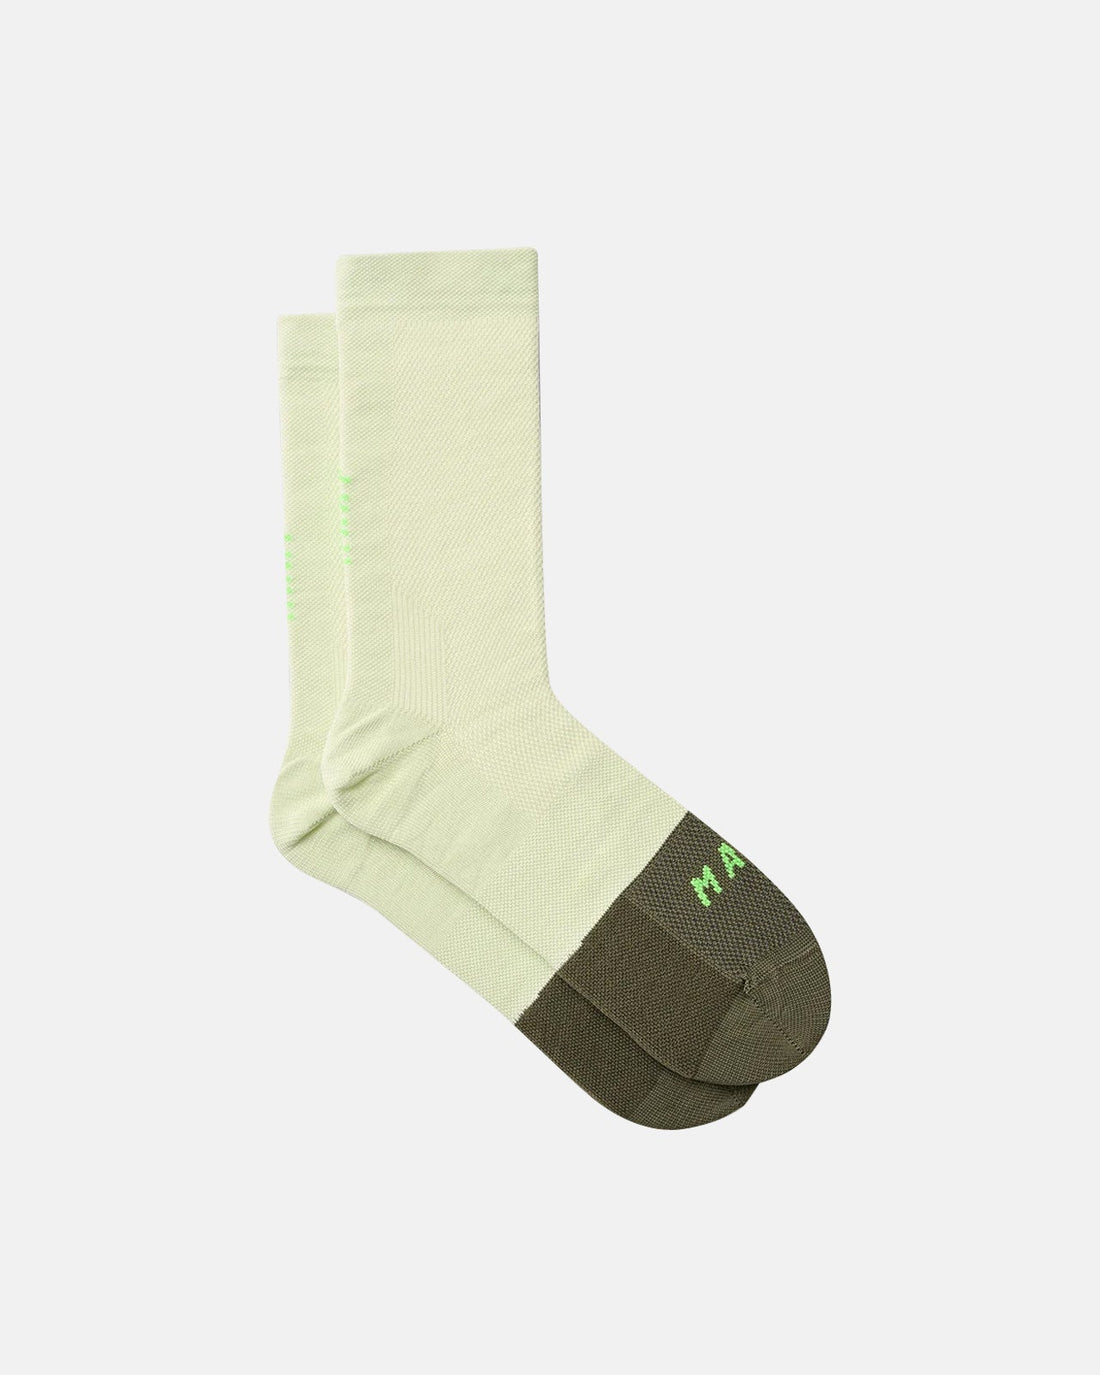 MAAP Division Sock - Dew/Bronze Green